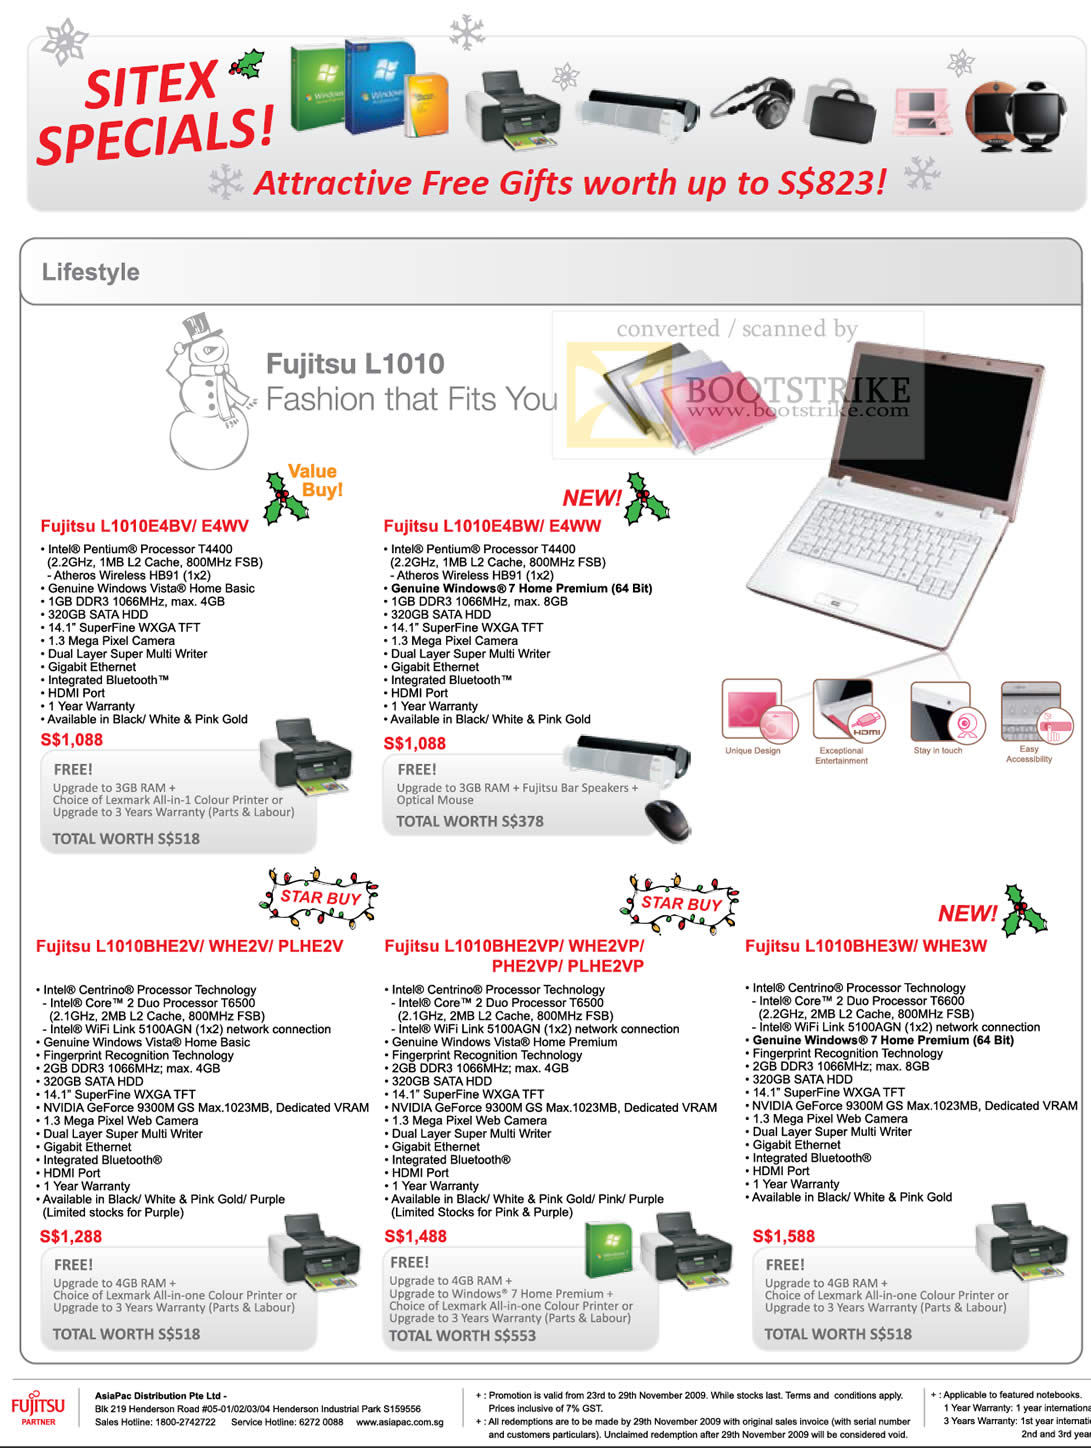 Sitex 2009 price list image brochure of Fujitsu Lifestyle L1010 Notebooks